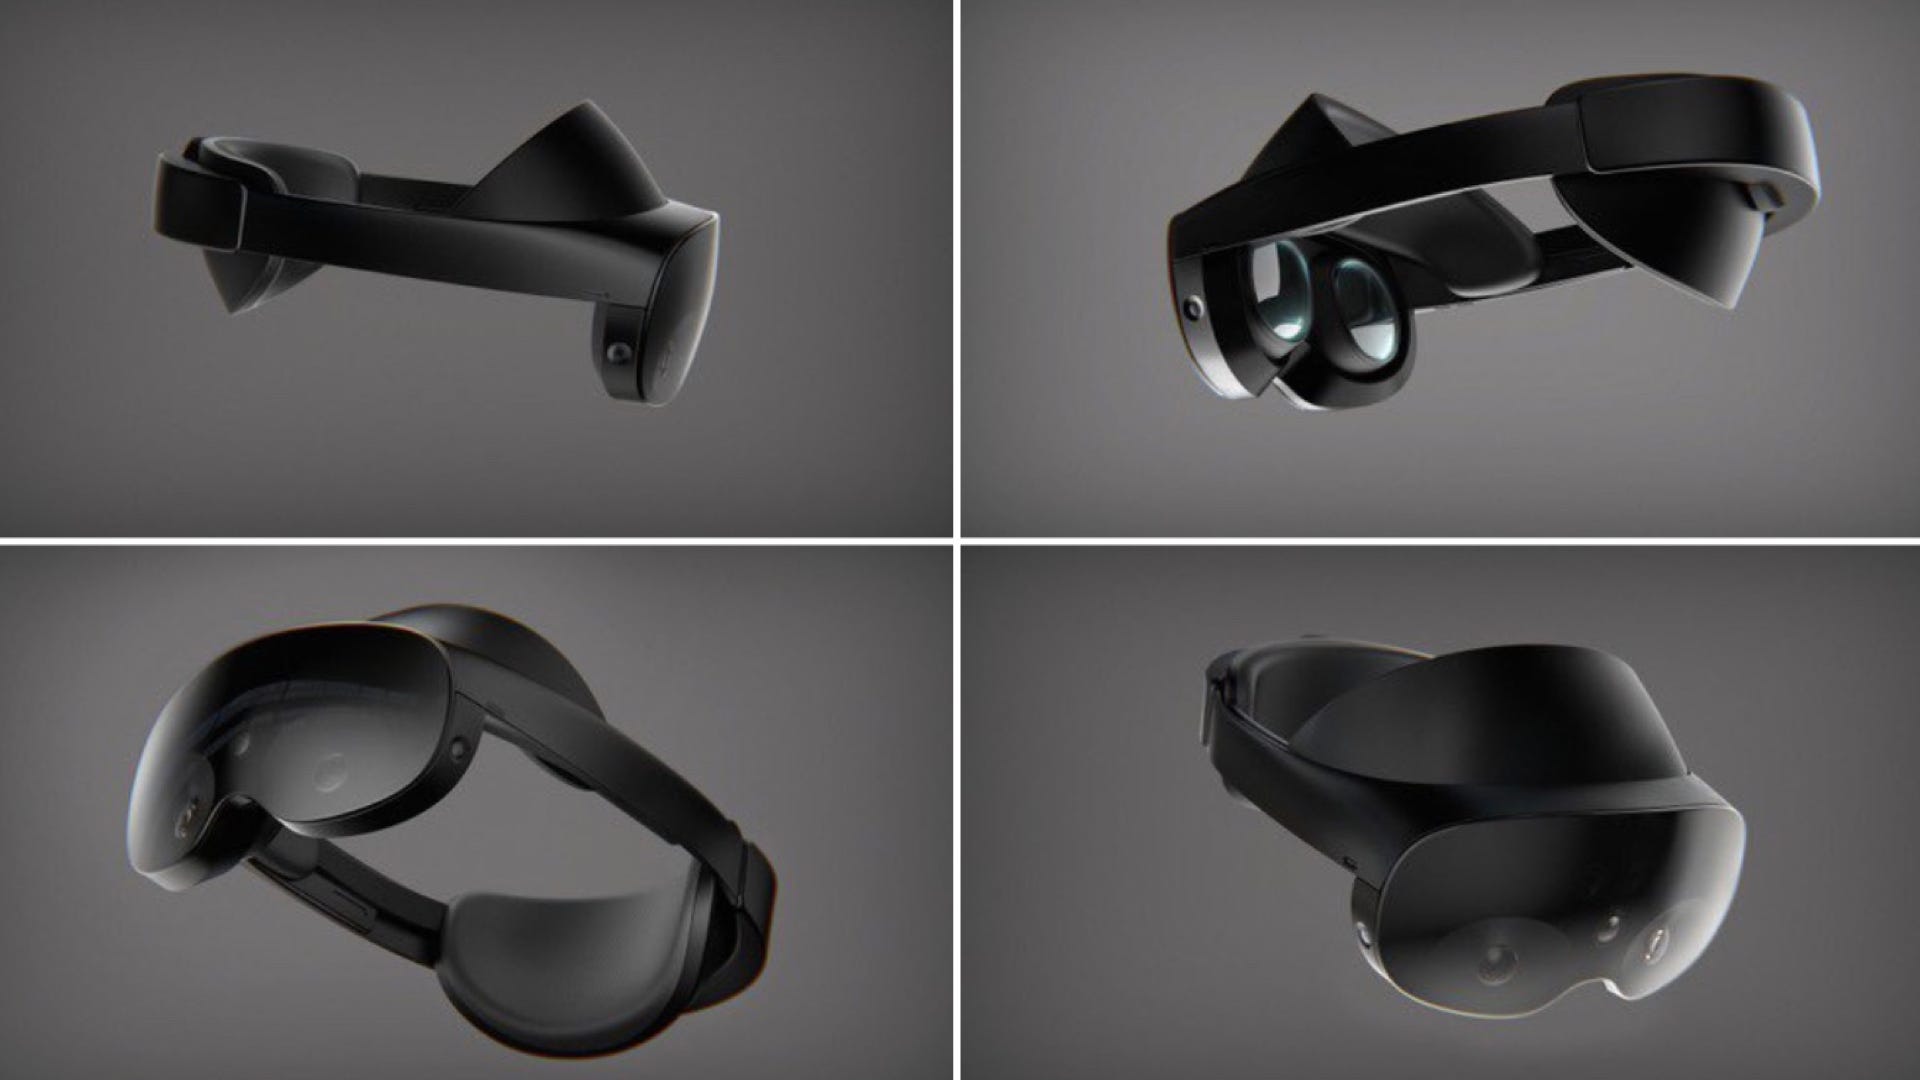 Leaked render of the new Meta VR headset